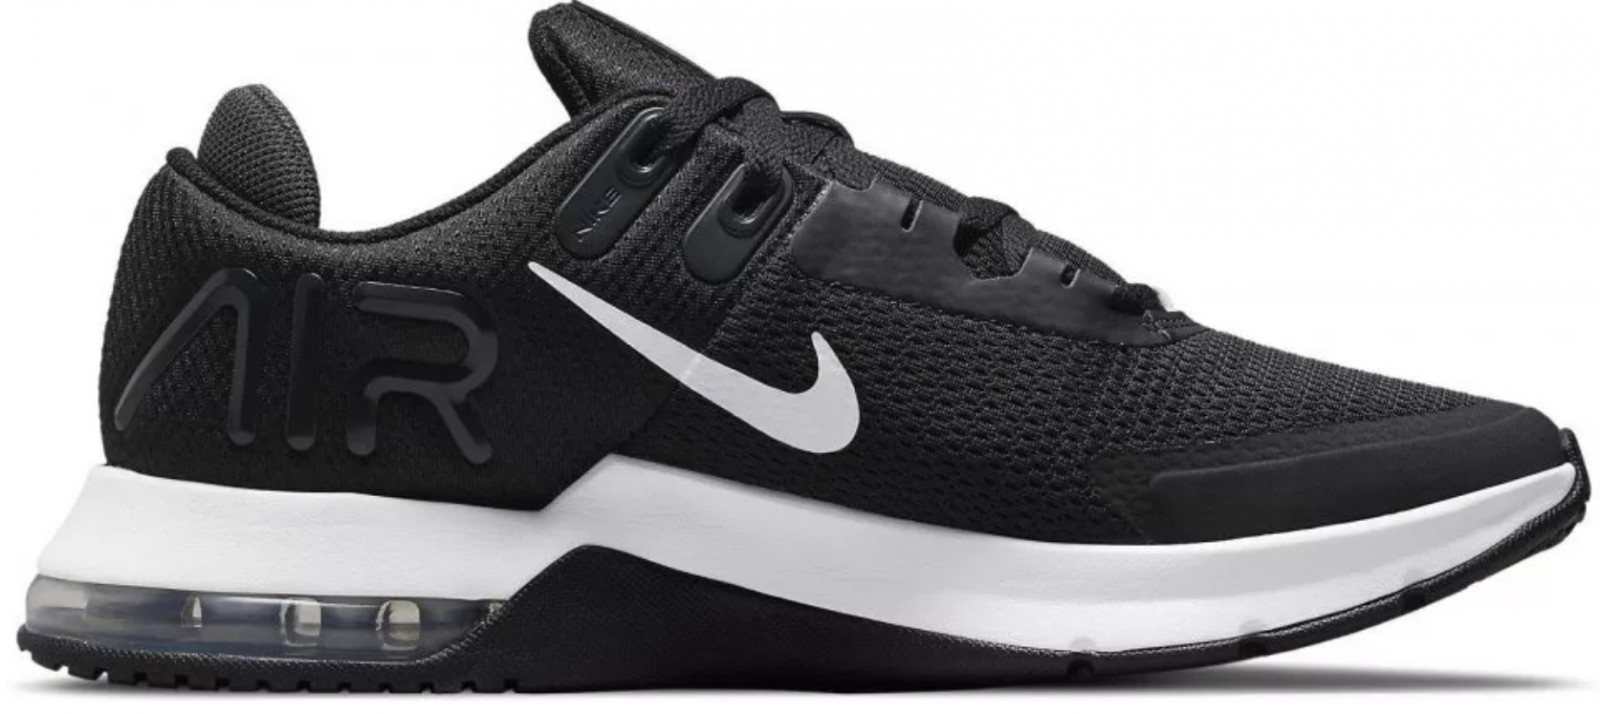 Кросівки чоловічі біг/фітнес Nike Air Max Alpha Trainer 4 black/white